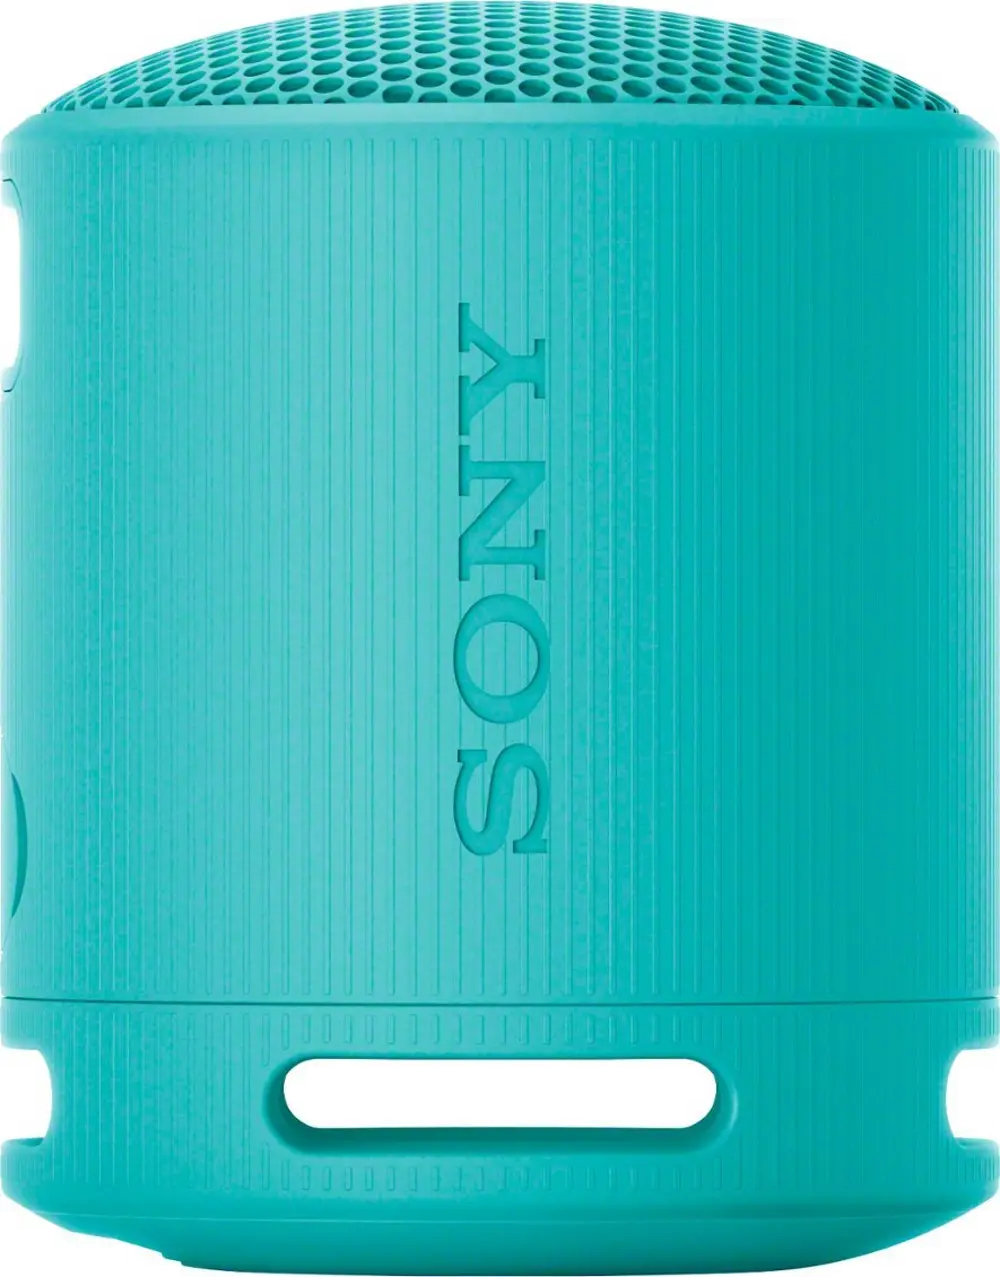 SRS-XB100/L Sony XB100 Compact Bluetooth Speaker - Aqua Blue-1